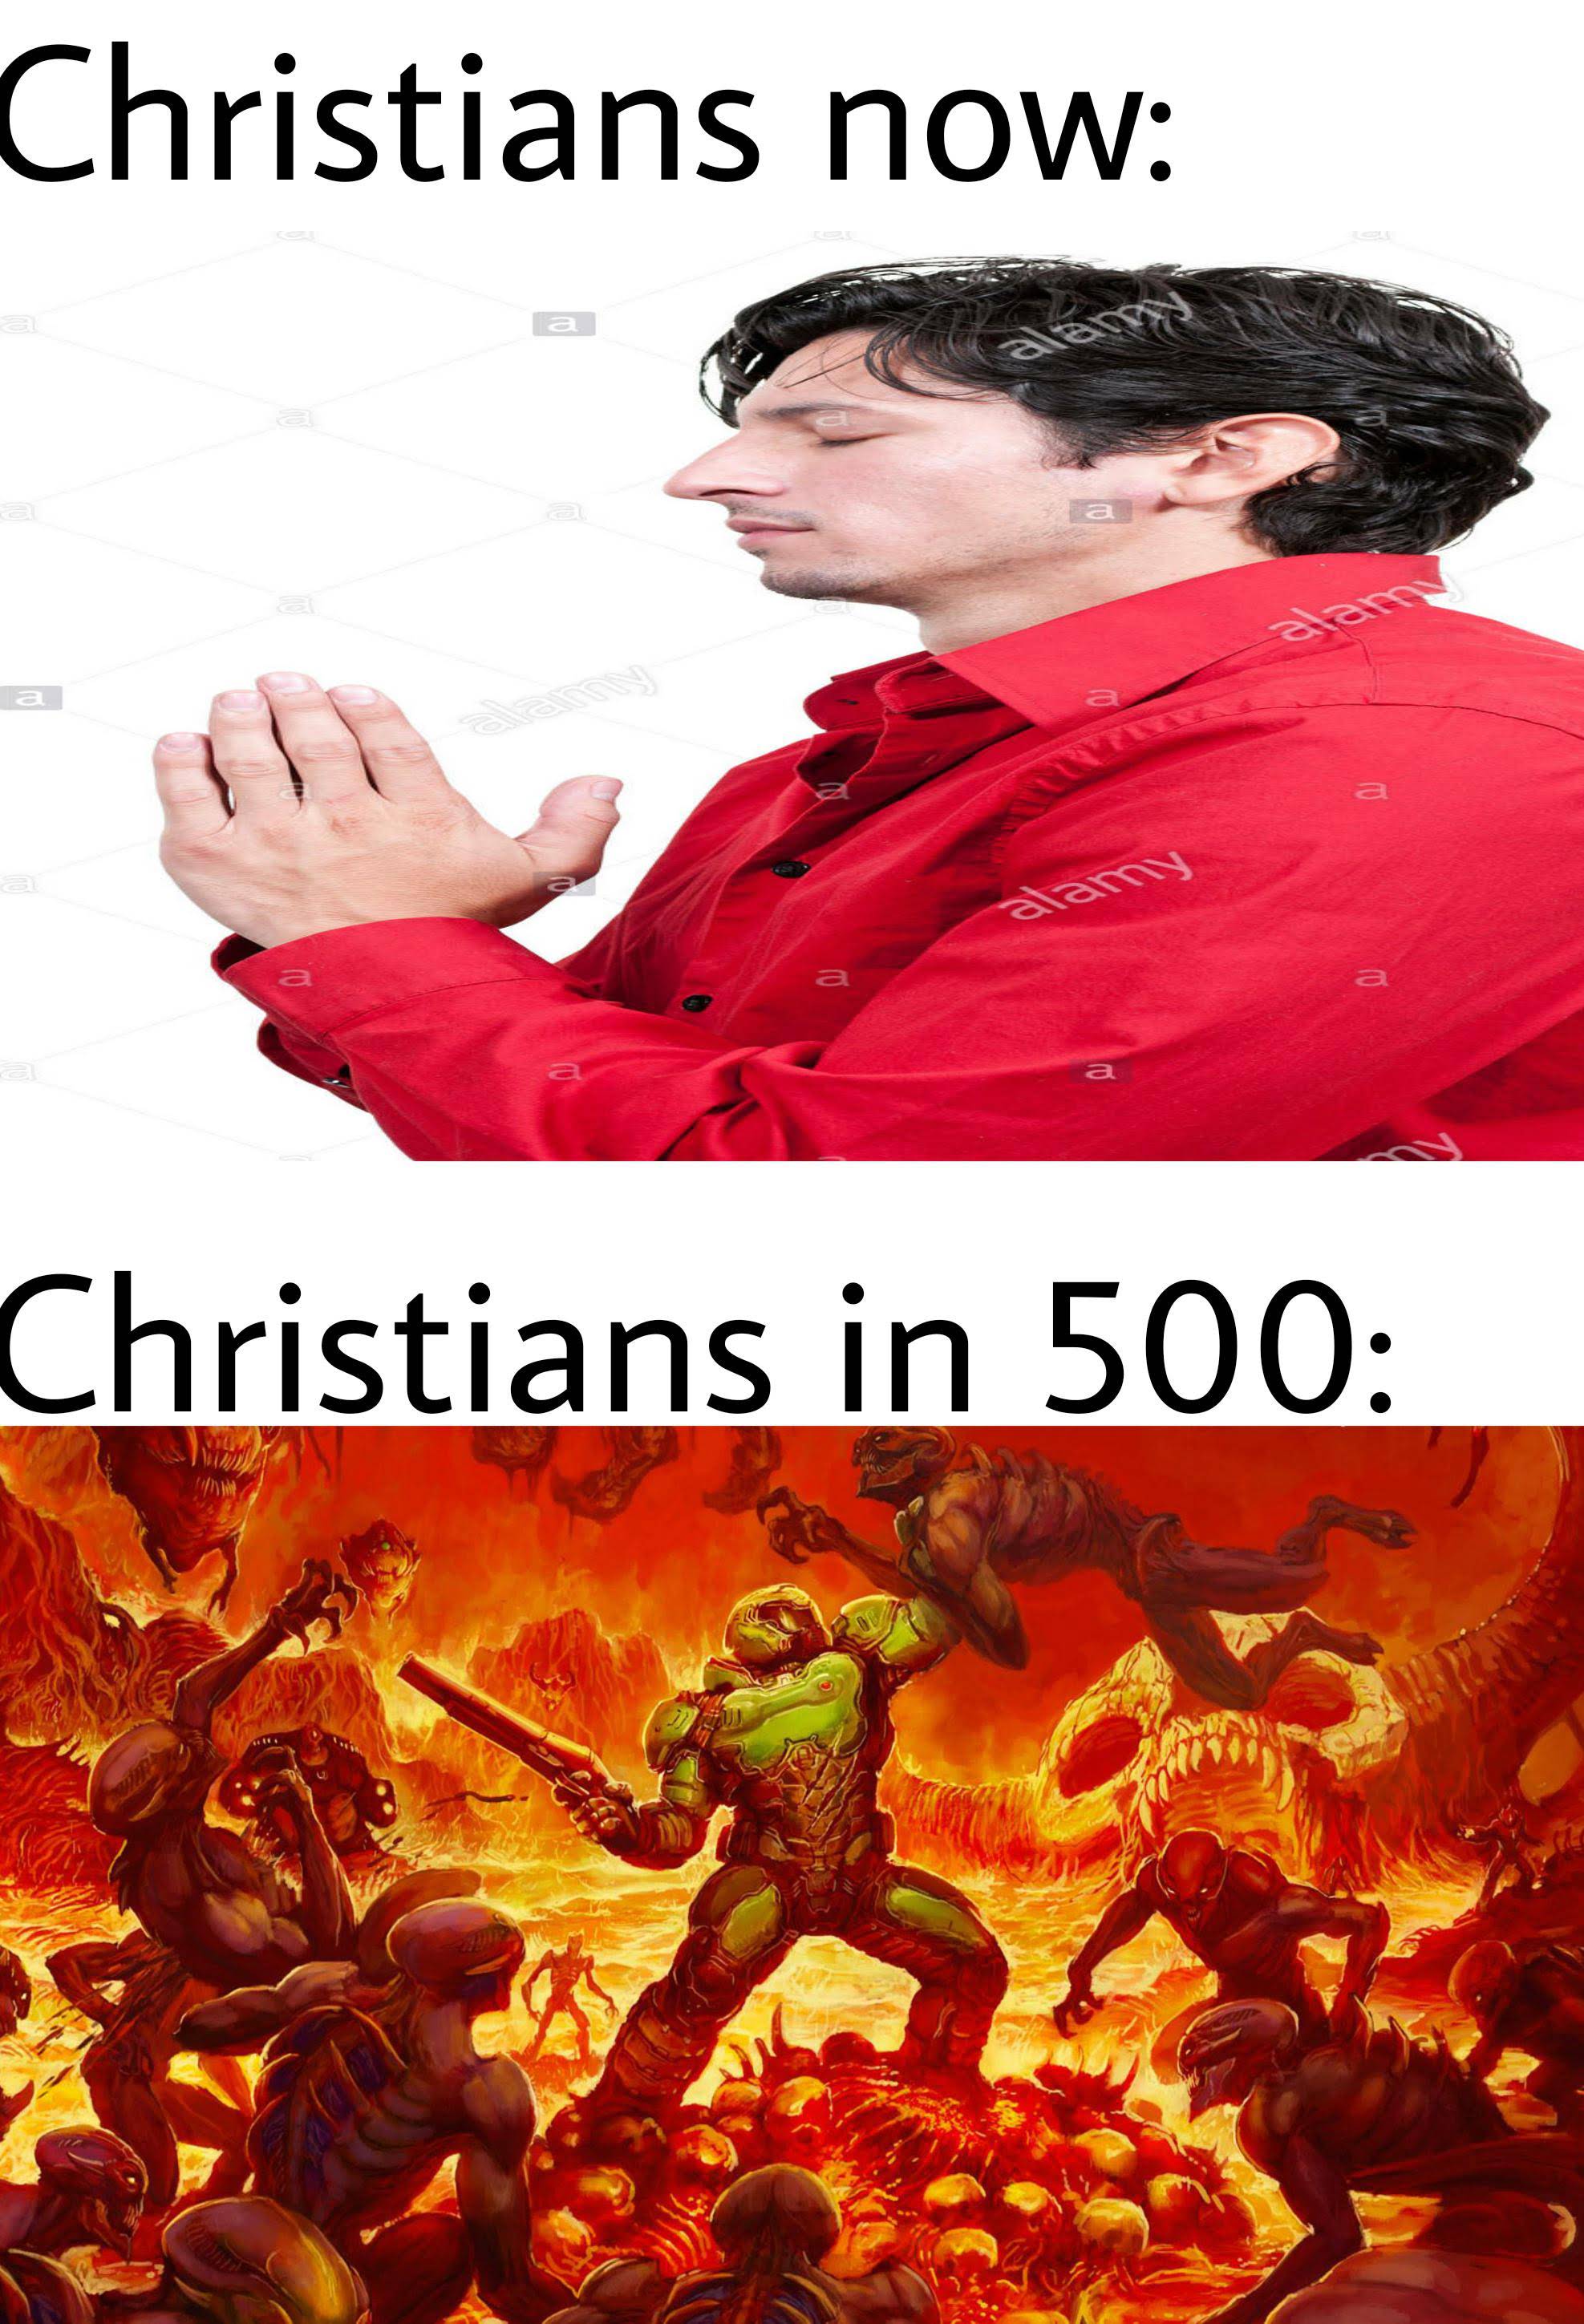 doom meme template - Christians now Christians in 500